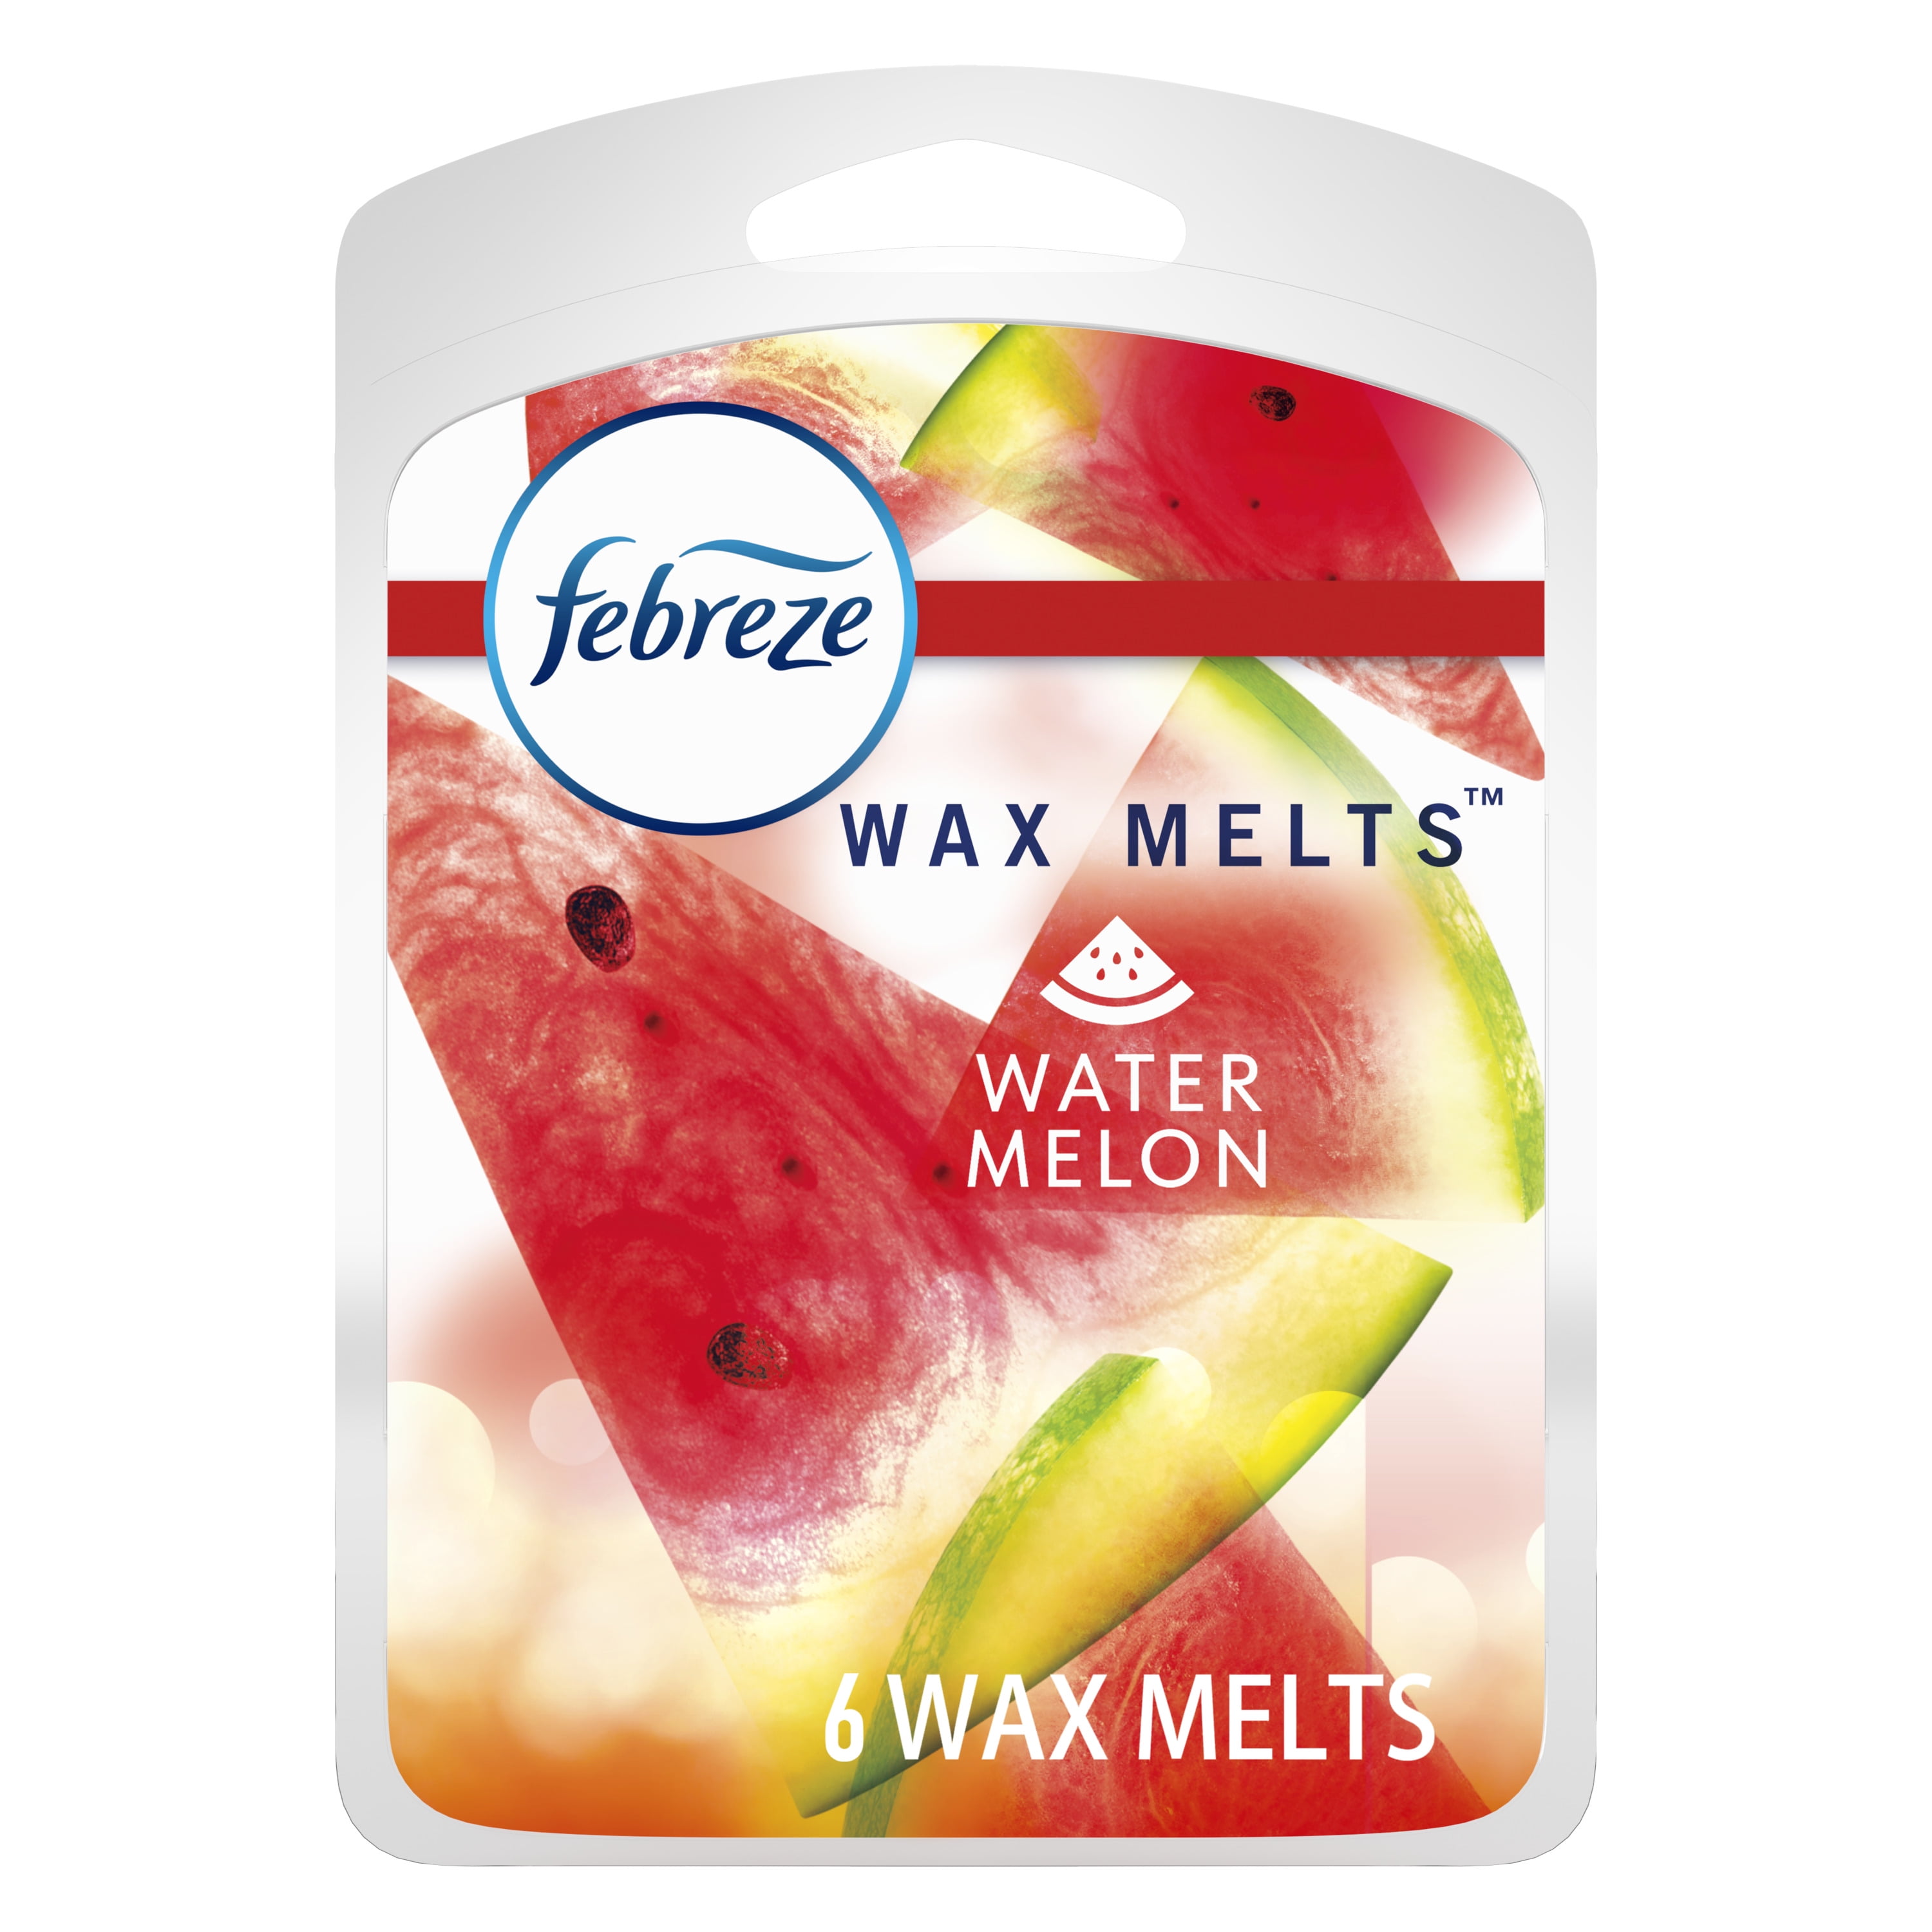 Febreze Wax Melts, Fresh-Harvest Pumpkin, 6 Count Wax Cubes, 2.75 Oz